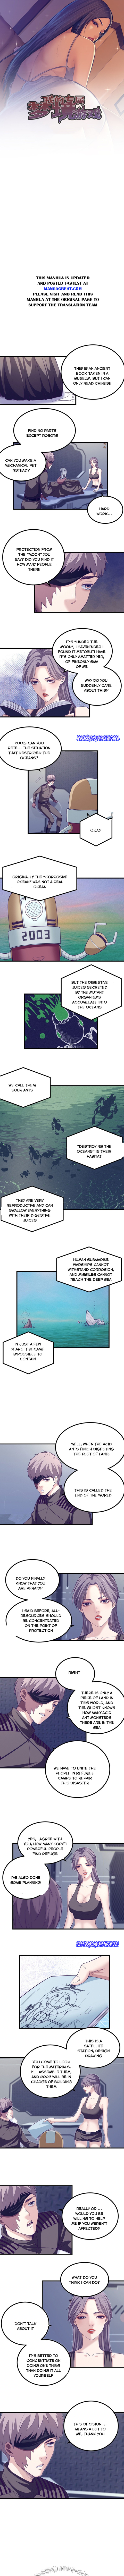 Dreamland Adventure - Page 1